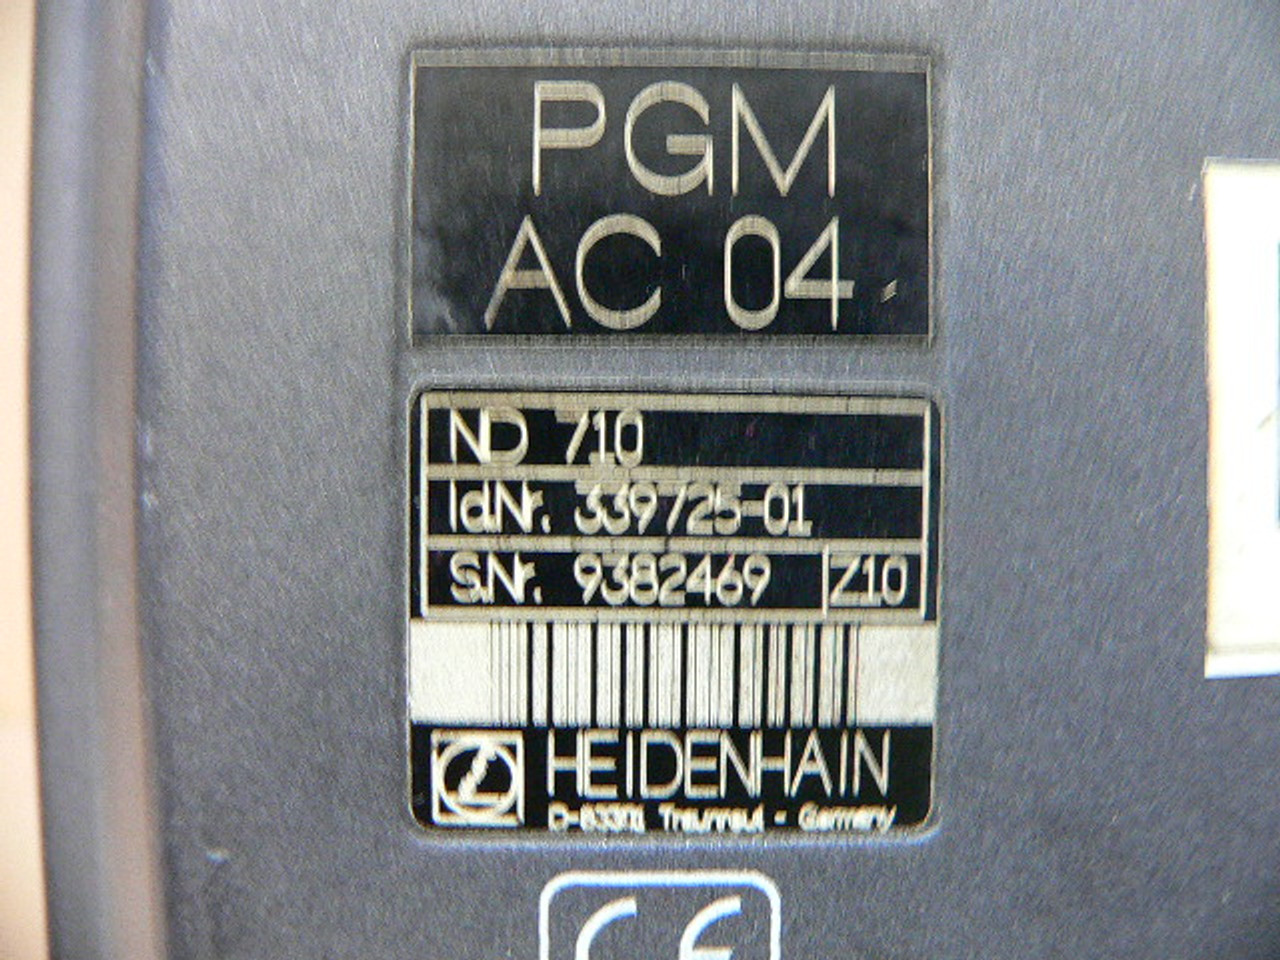 HEIDENHAIN PGM AC 04, ND 710 339725-01 DIGITAL READ OUT CNC - Fen ...